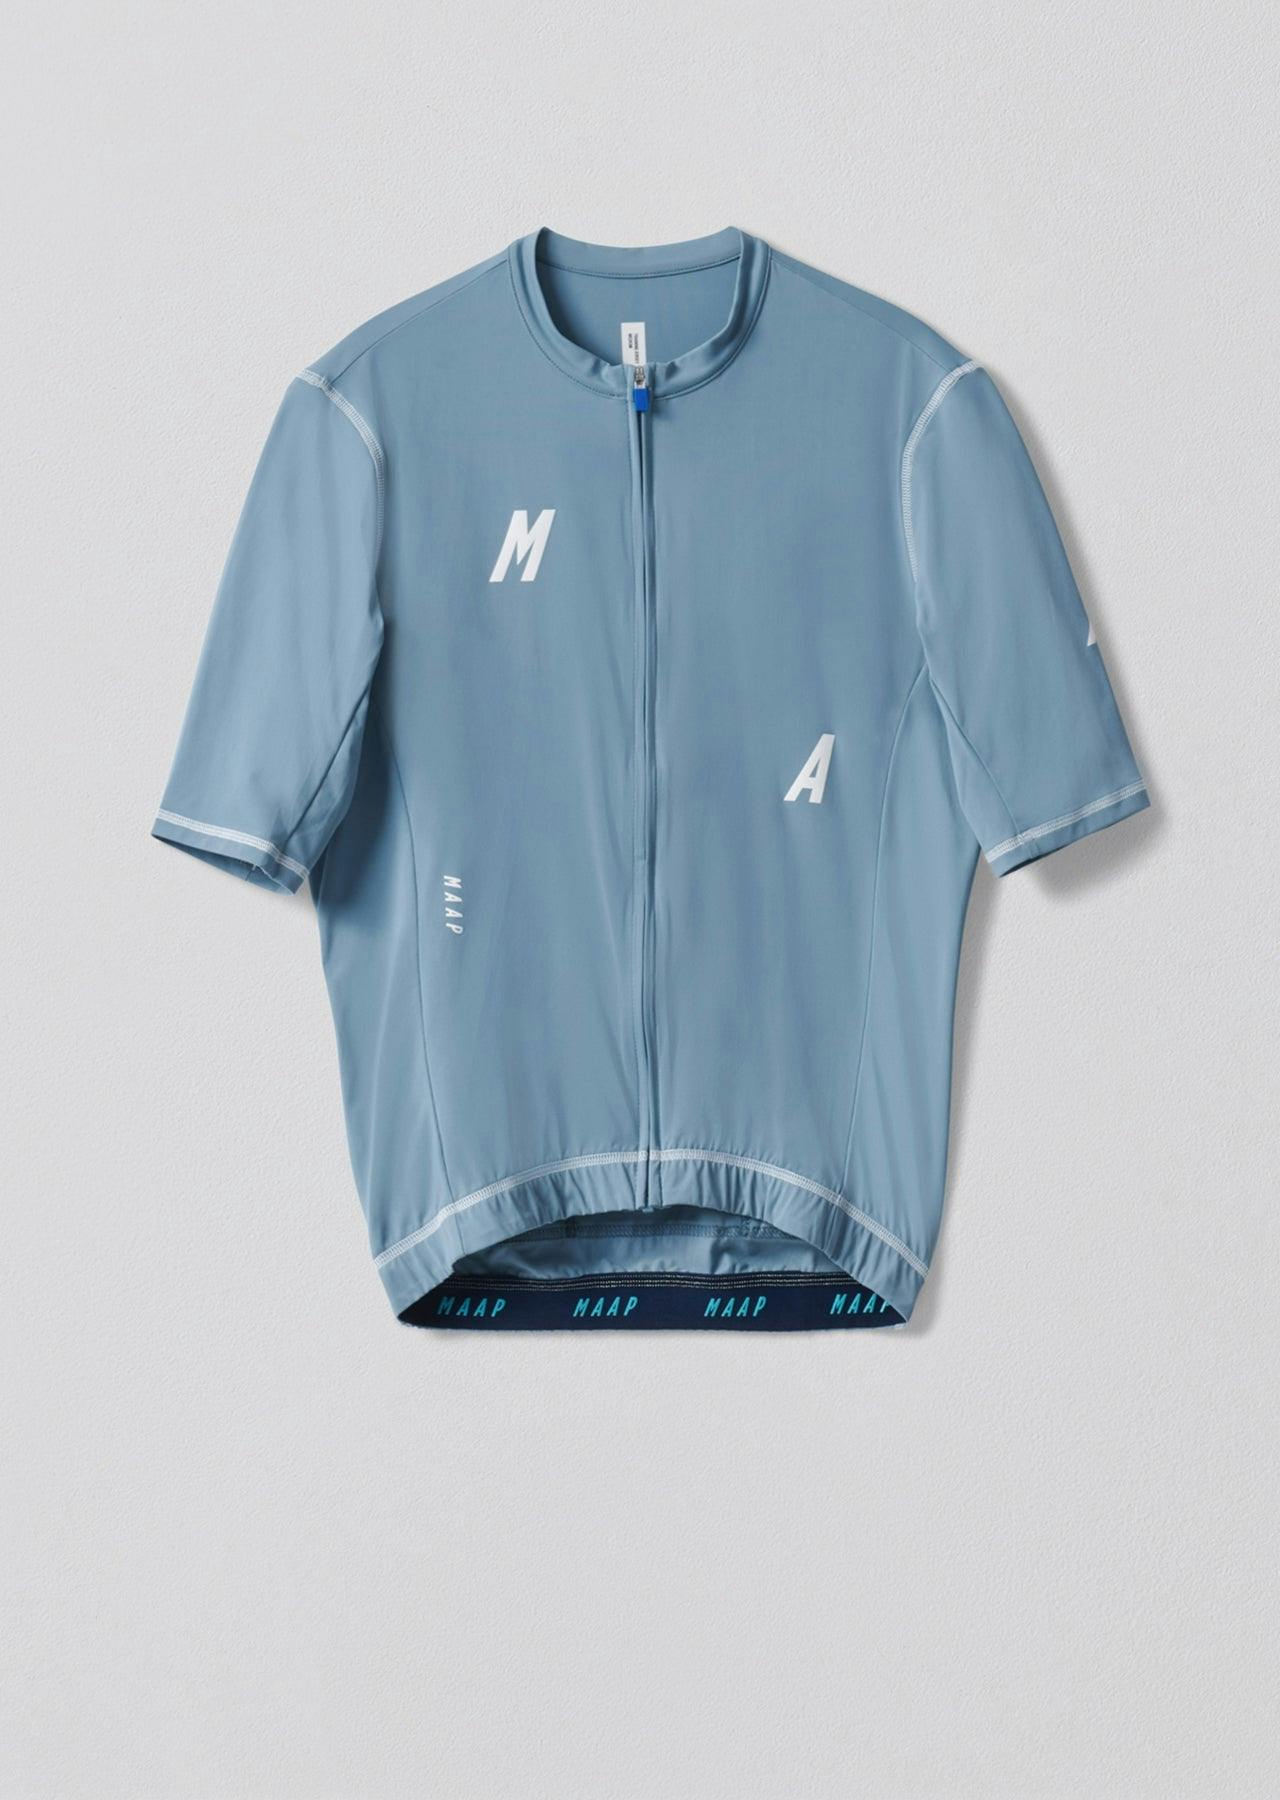 Men’s Cycling Clothing | MAAP